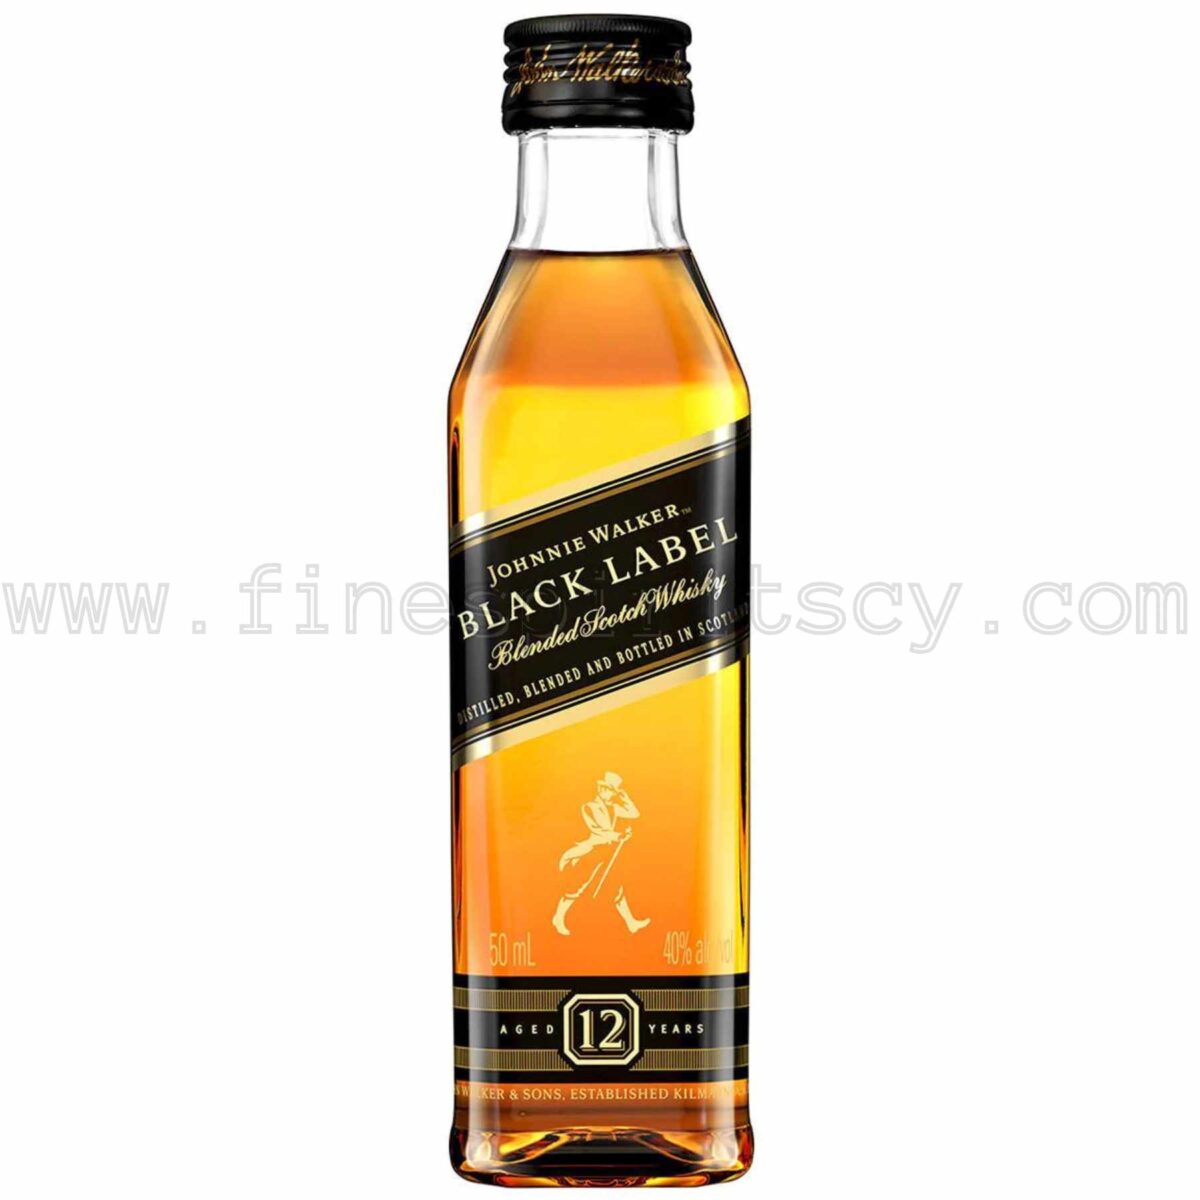 Johnnie Walker black label 50ml Blended Scotch Whisky Cyprus Price